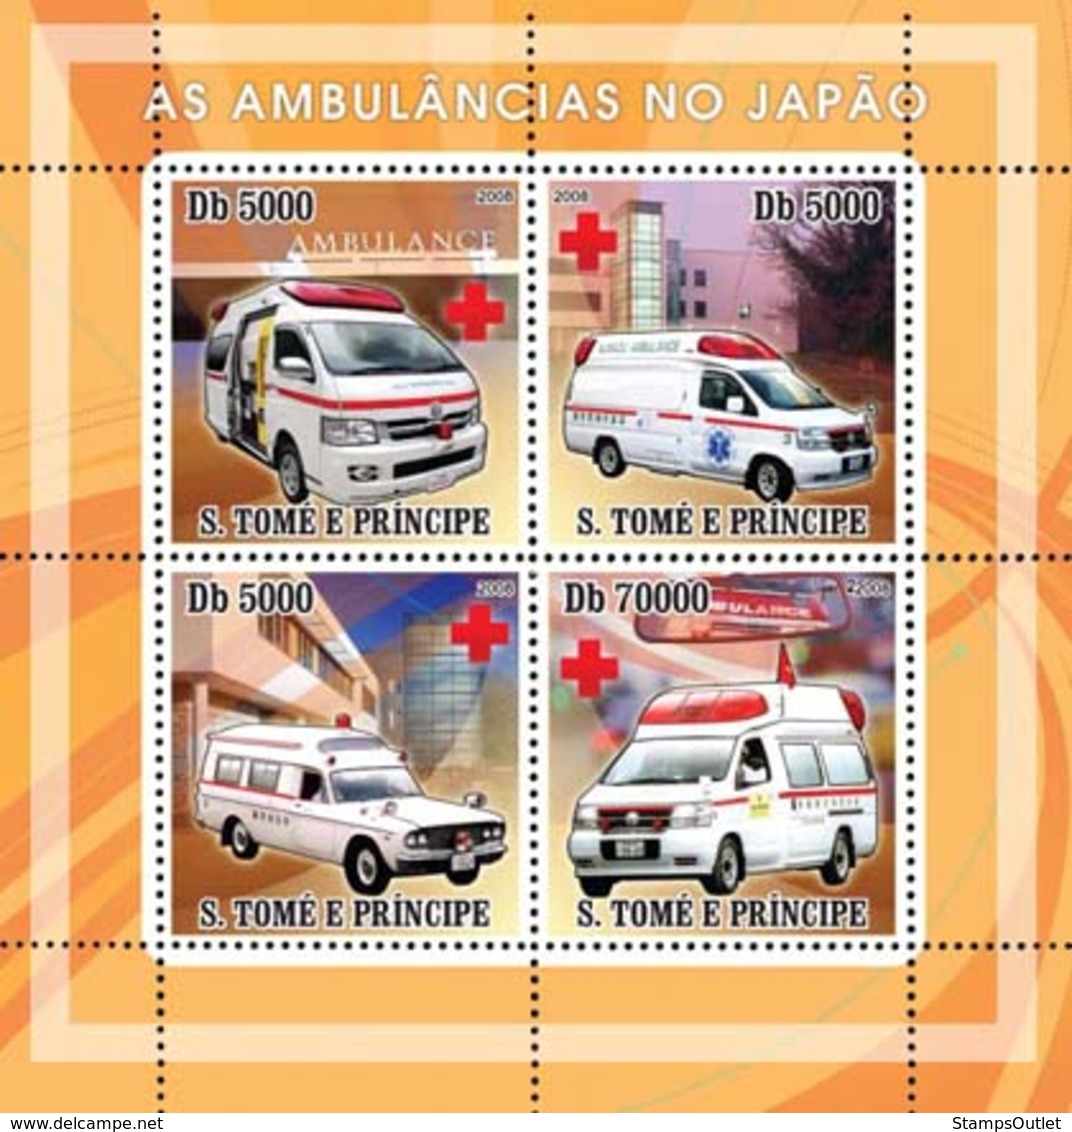 S. TOME & PRINCIPE 2008 - Ambulances Japanese, Red Cross 4v - YT 2526-2529, Mi 3314-3317 - Sao Tome And Principe